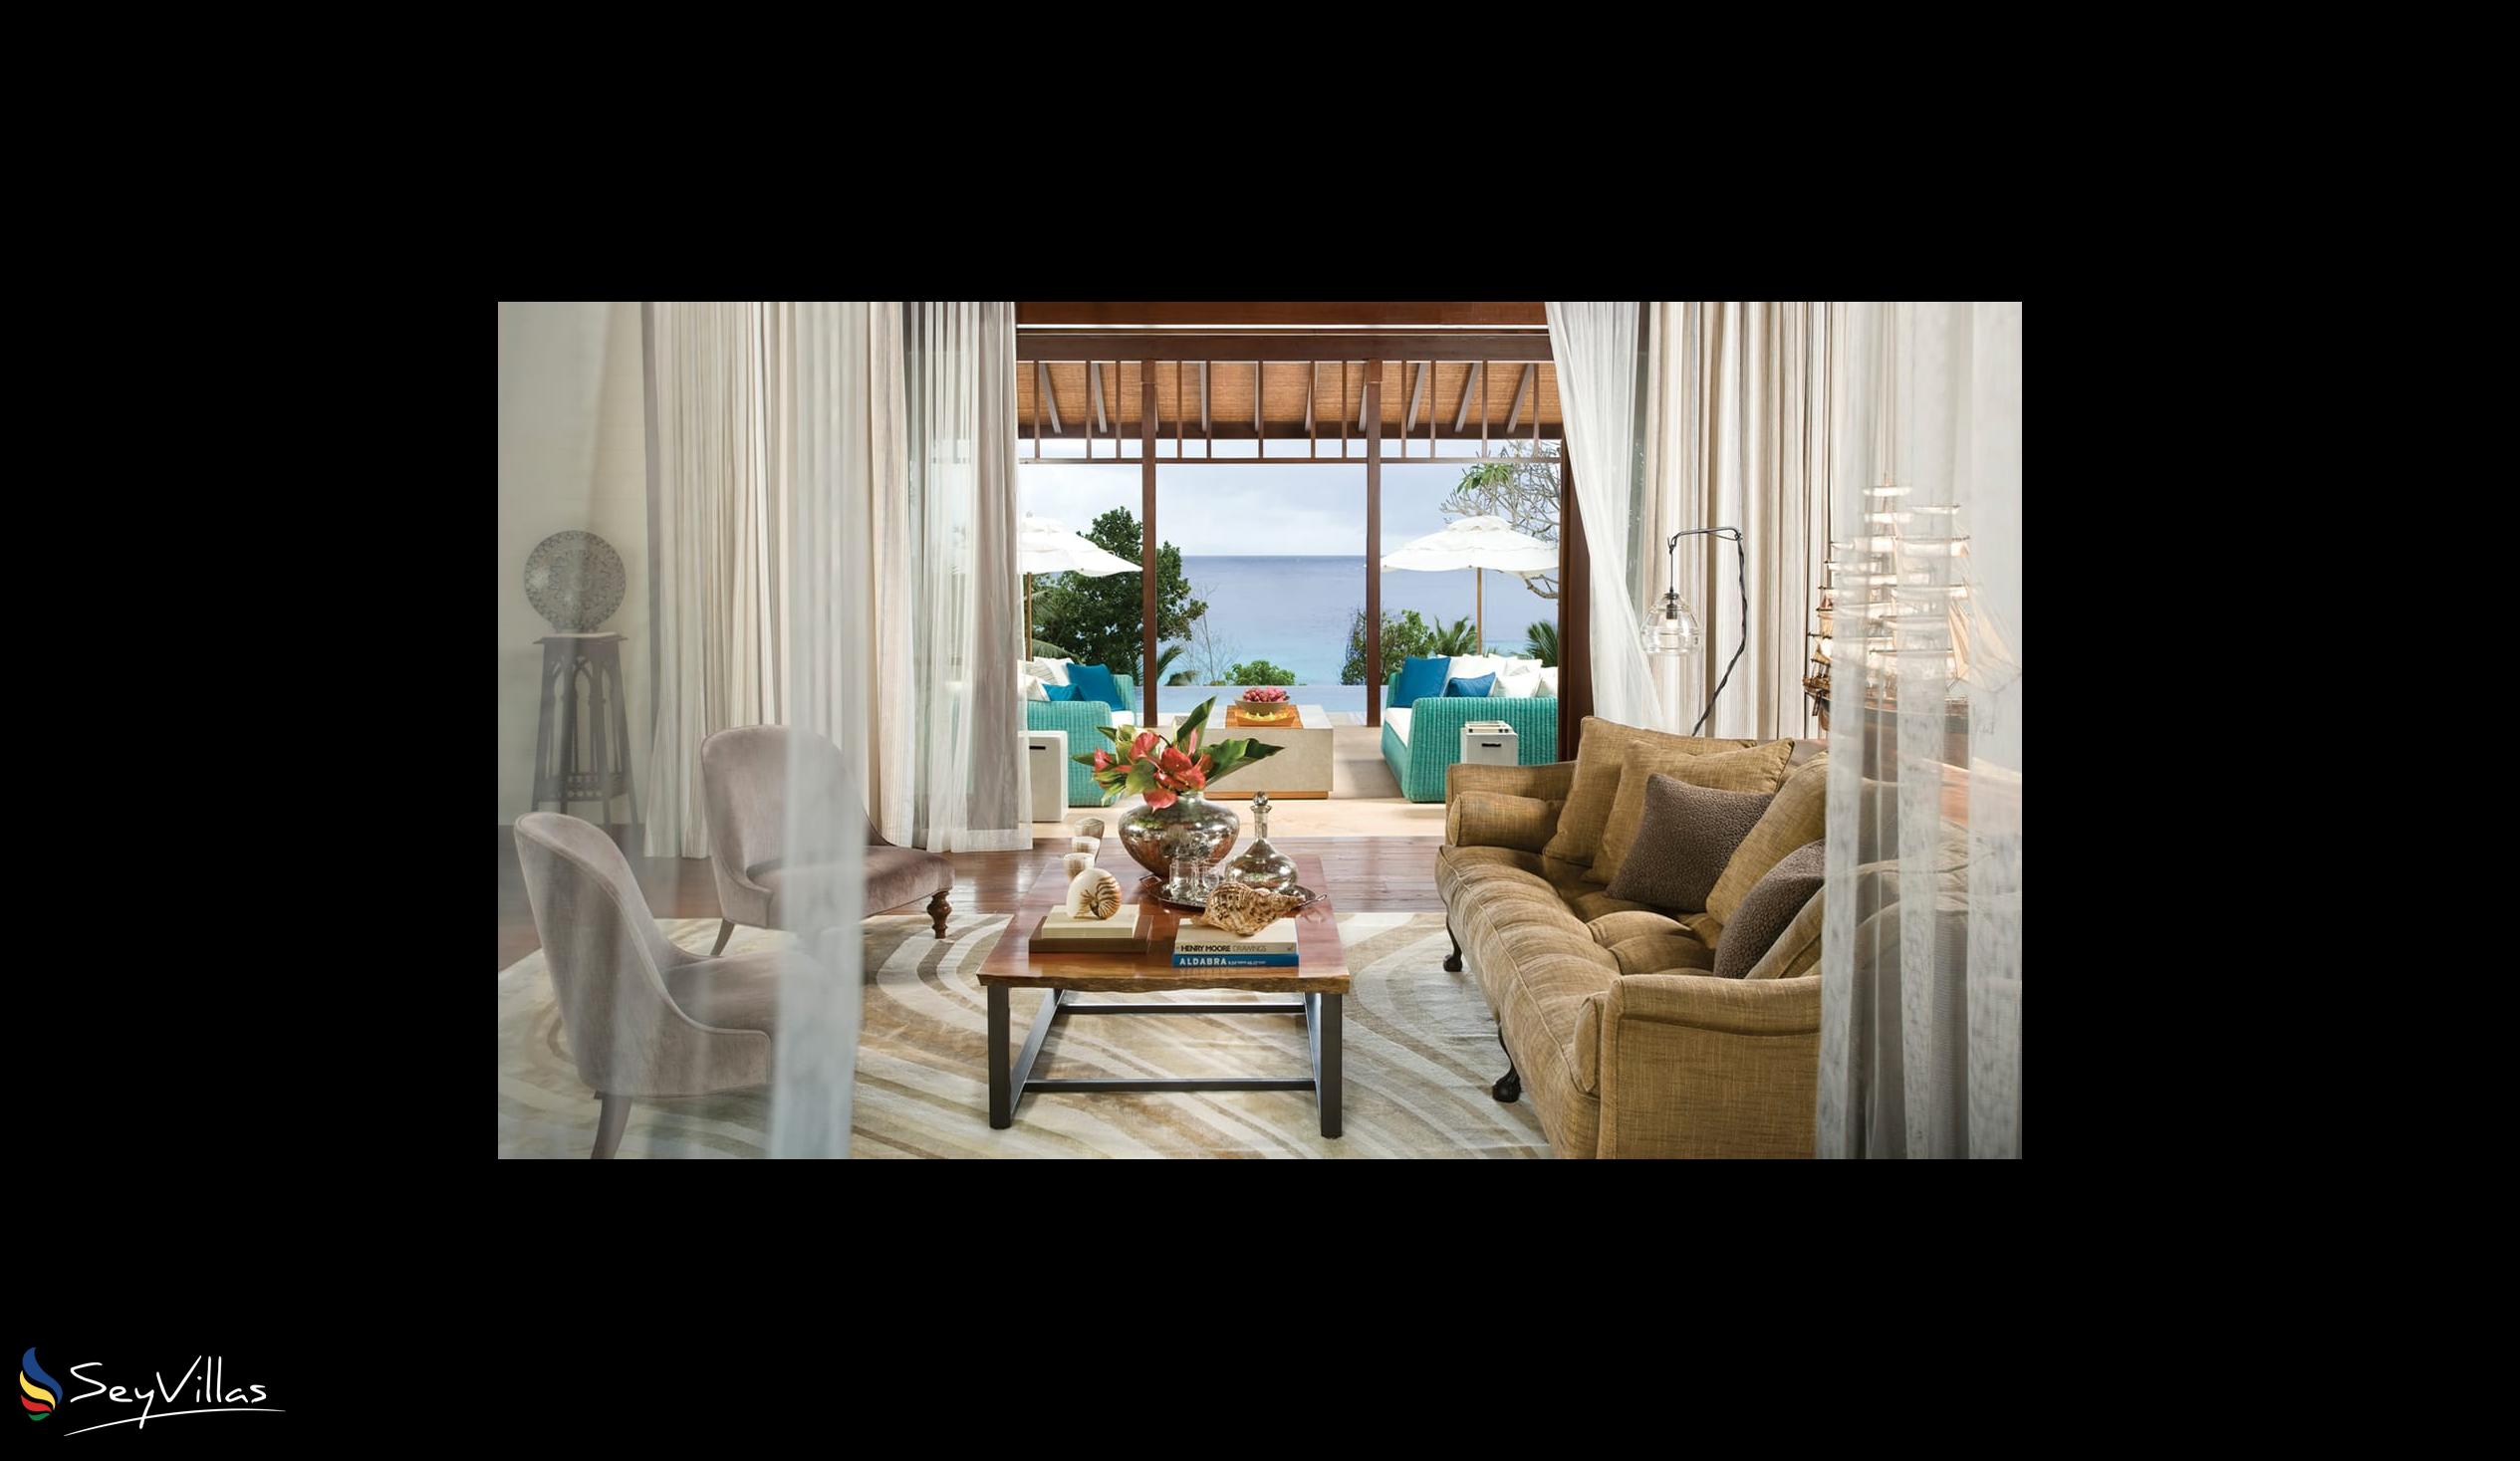 Photo 60: Four Seasons Resort - 3-Bedroom Presidential Suite - Mahé (Seychelles)